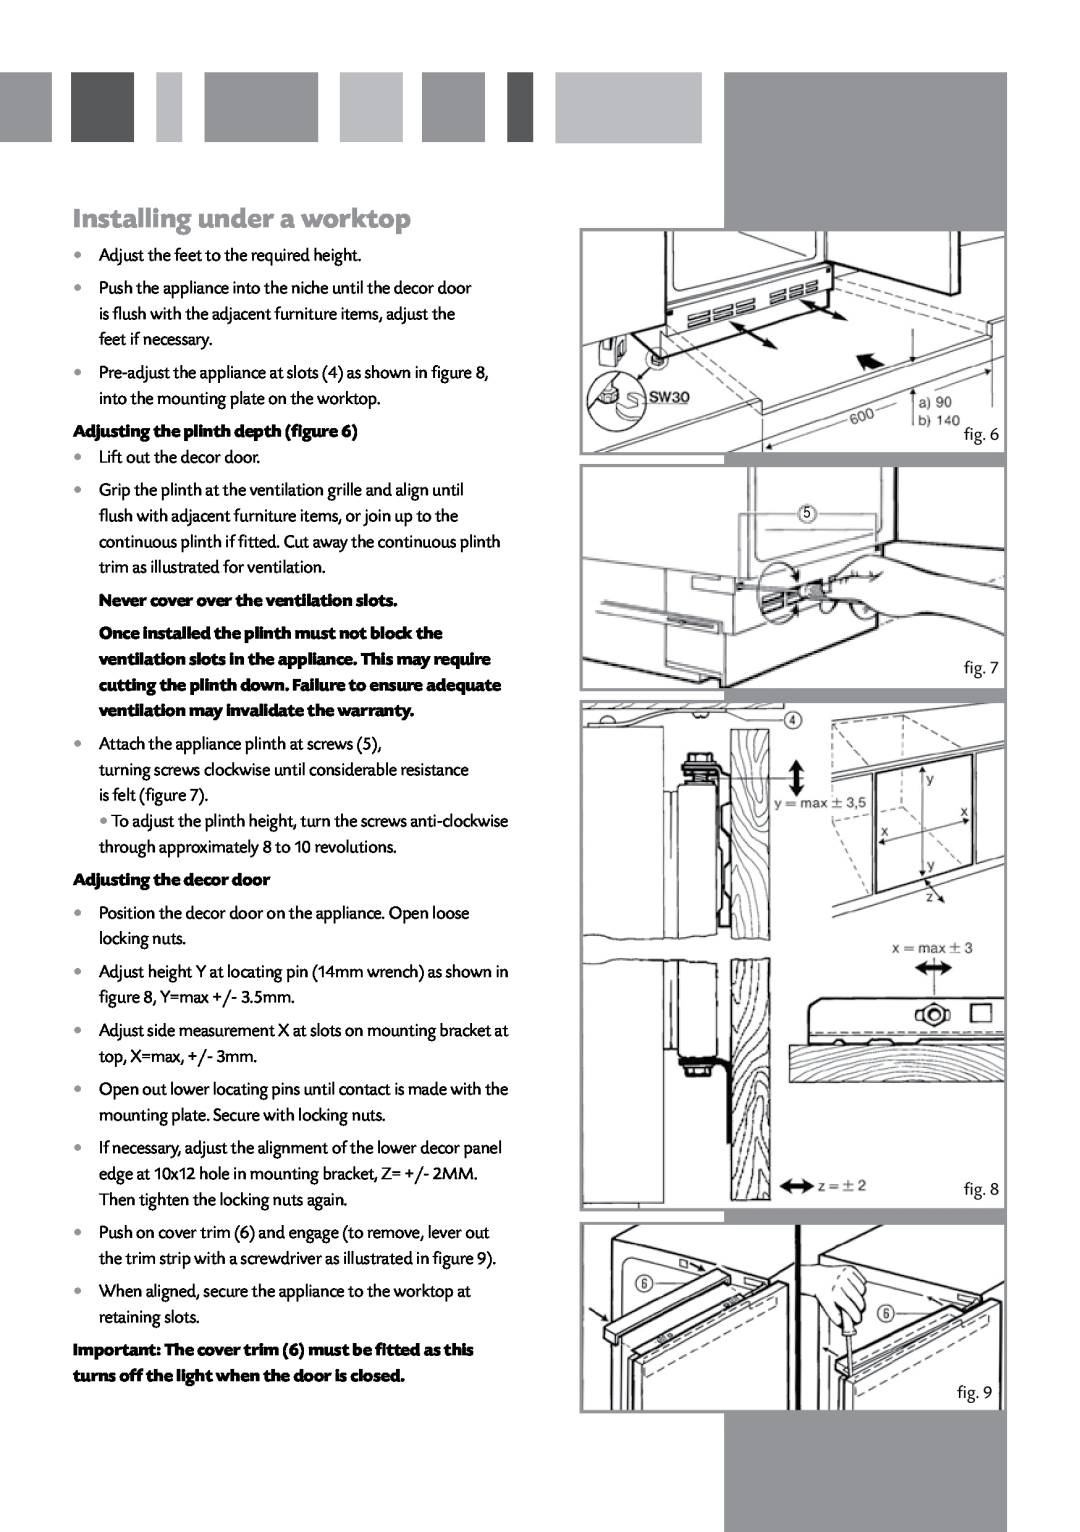 CDA FW221 manual Installing under a worktop, Adjusting the plinth depth figure, Never cover over the ventilation slots 